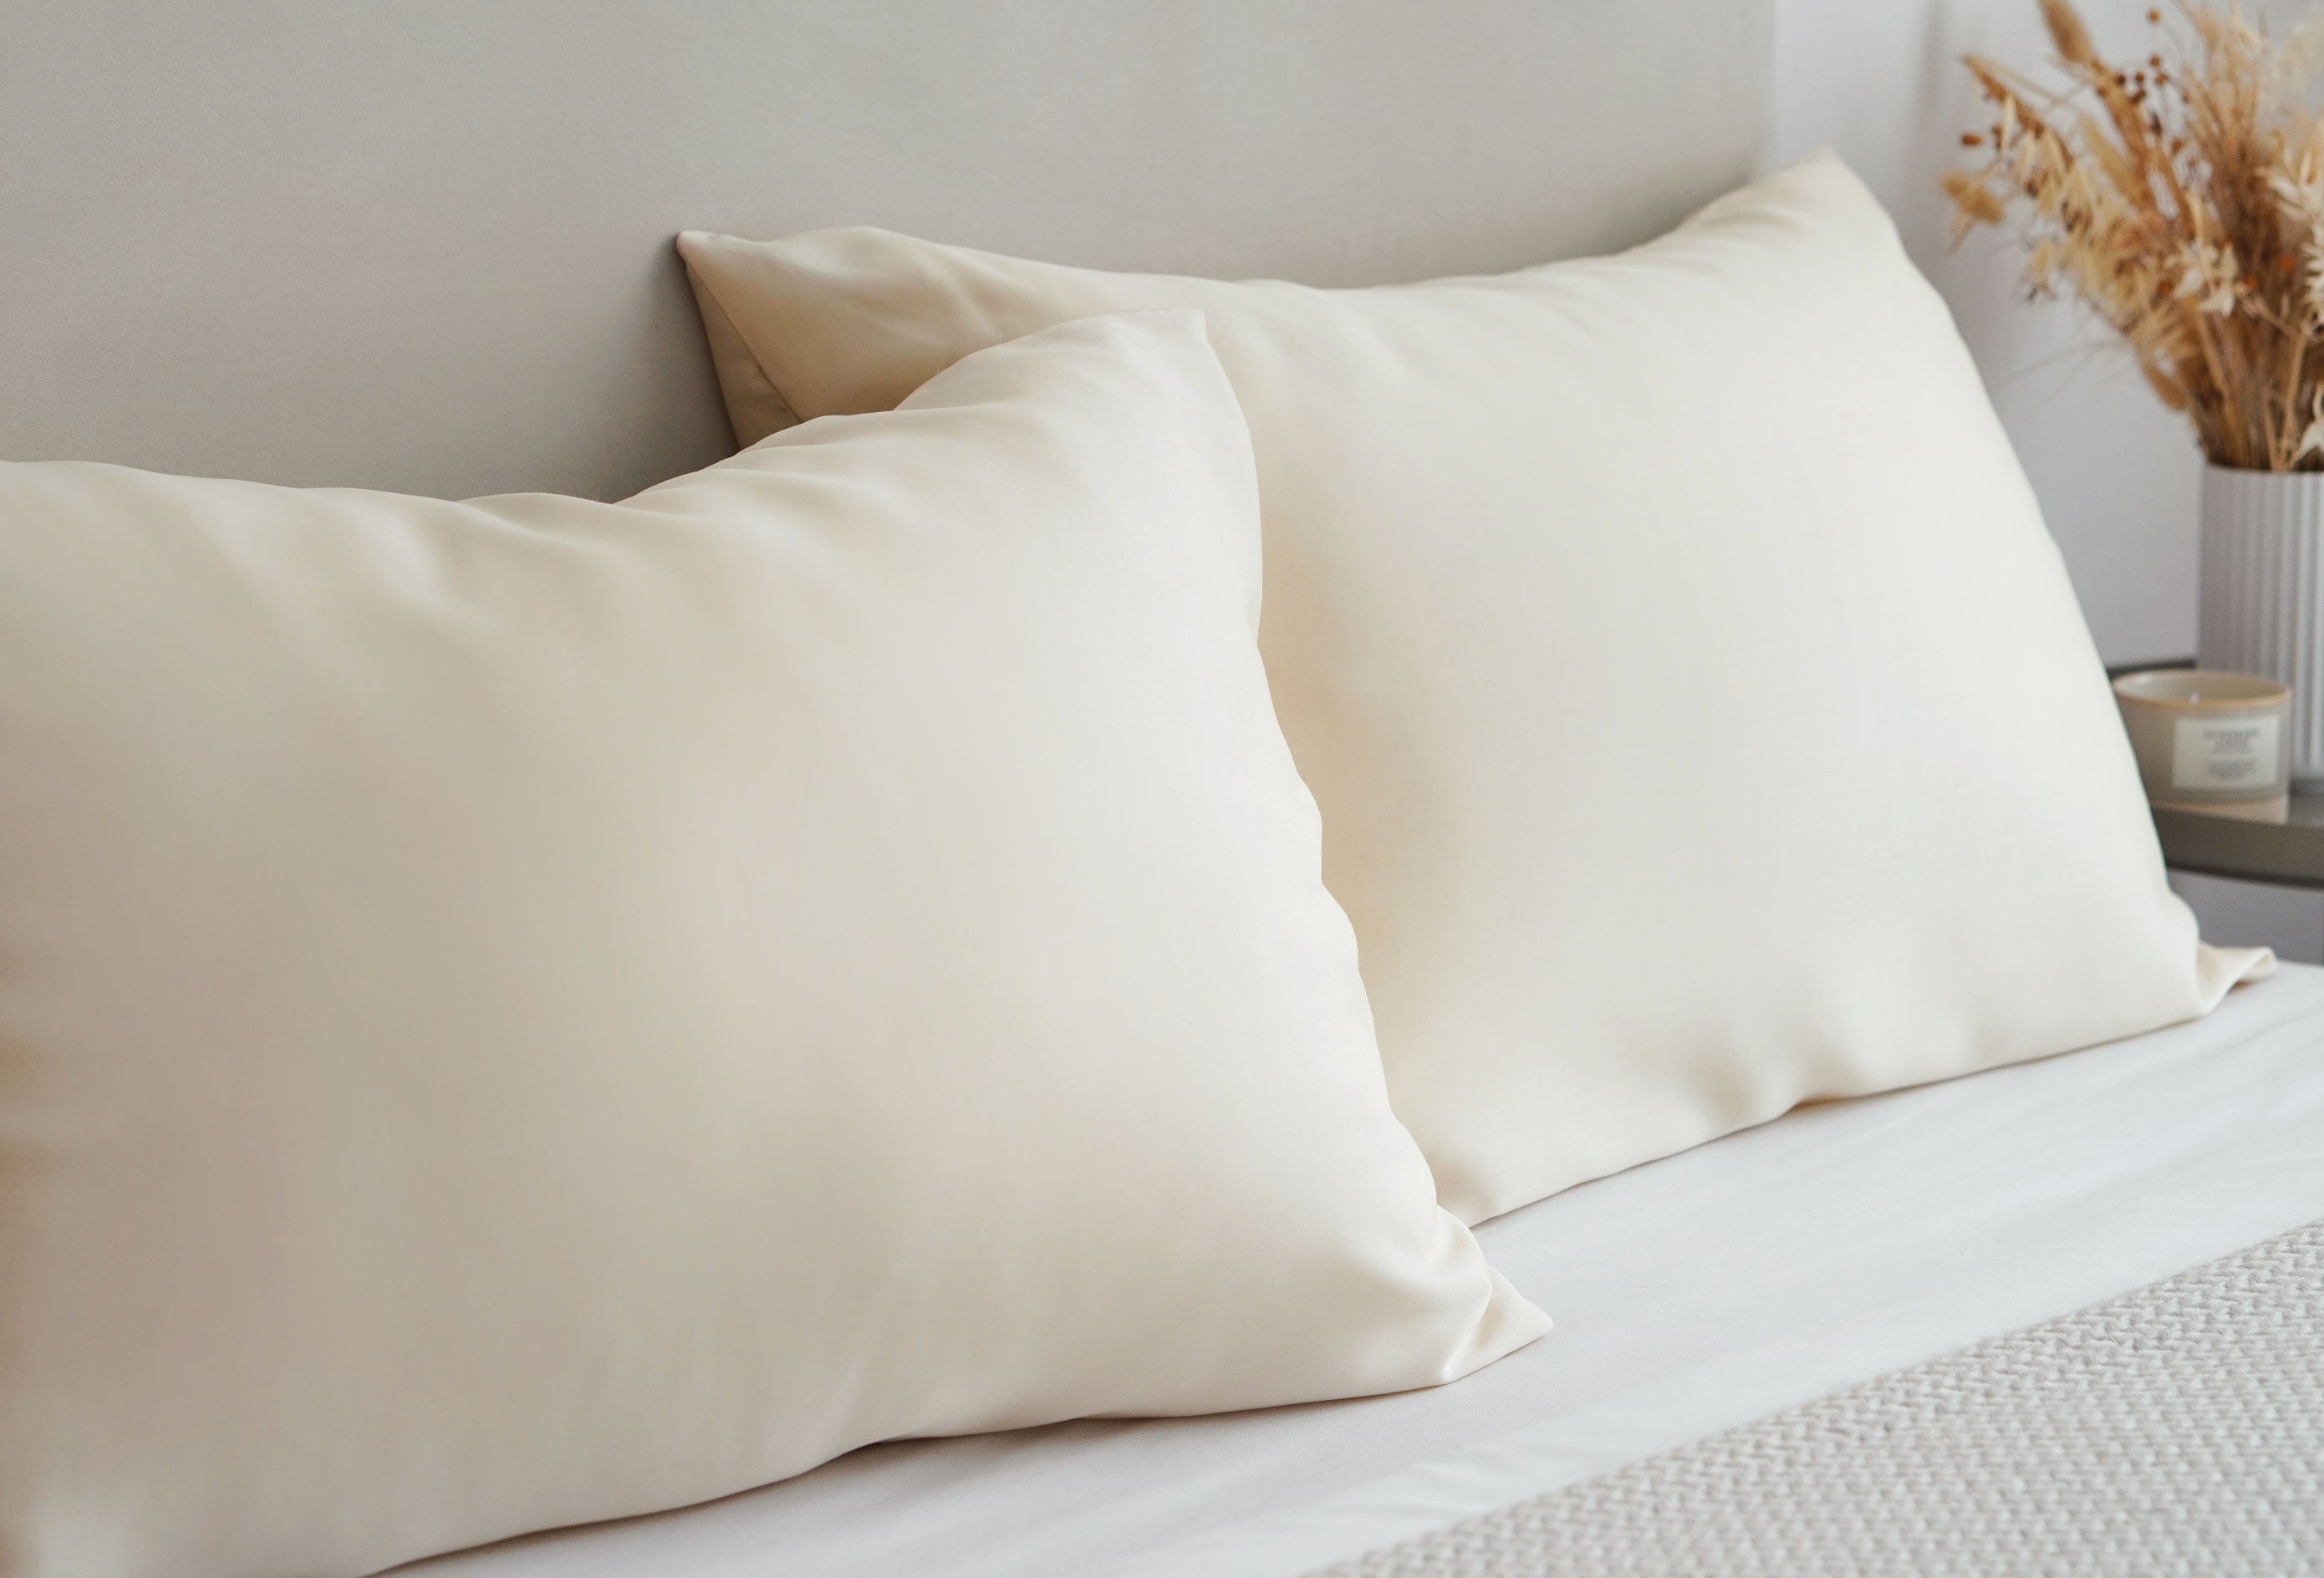 Brightr® Copper Anti-Breakout  Pillowcase